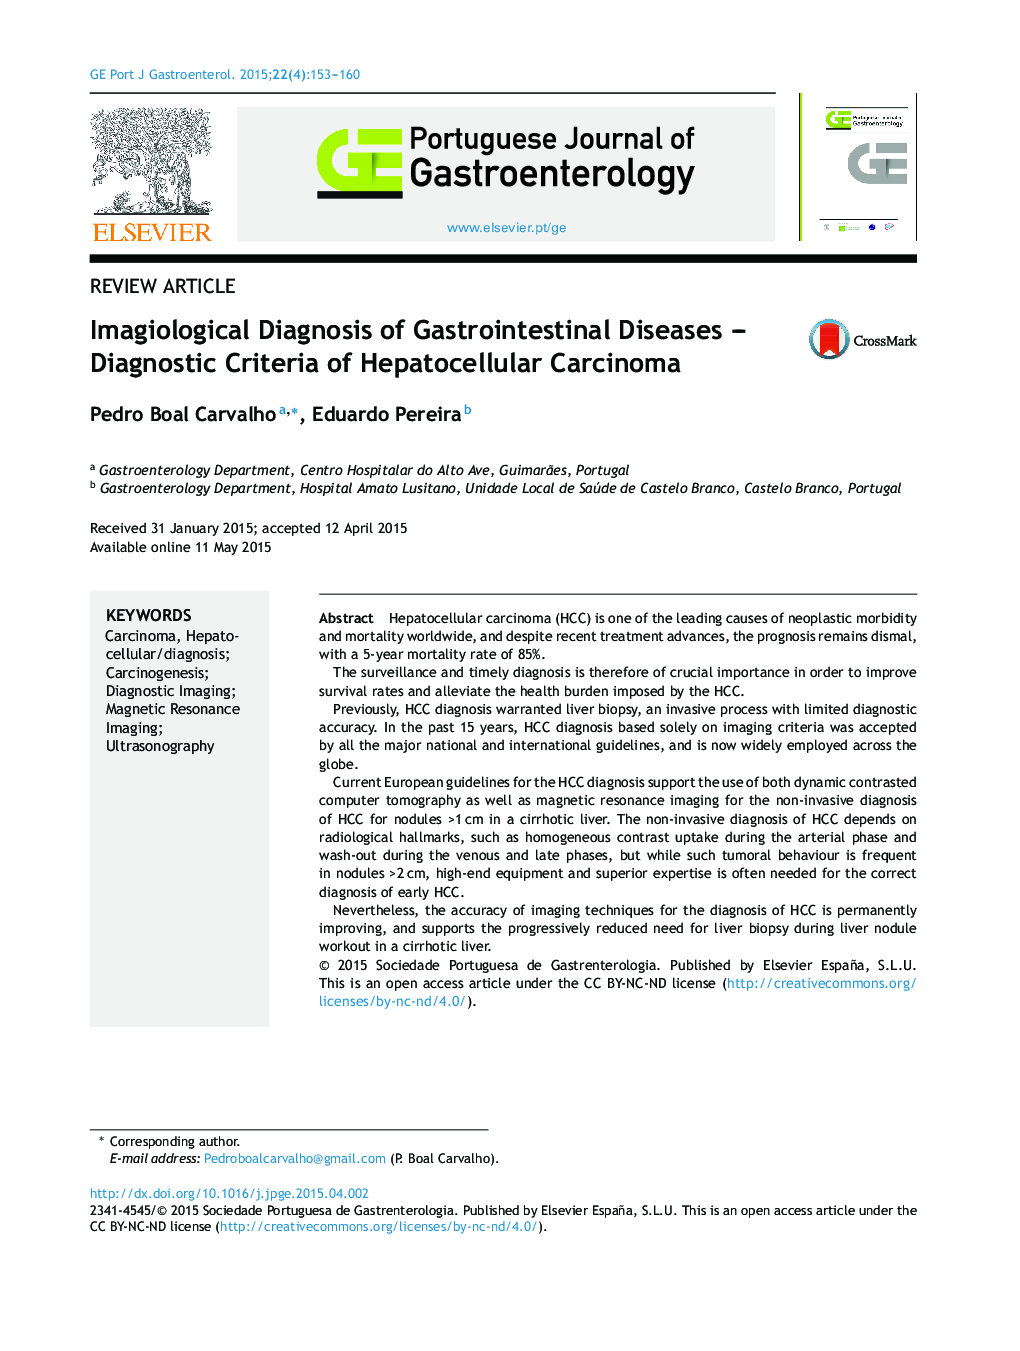 Imagiological Diagnosis of Gastrointestinal Diseases – Diagnostic Criteria of Hepatocellular Carcinoma